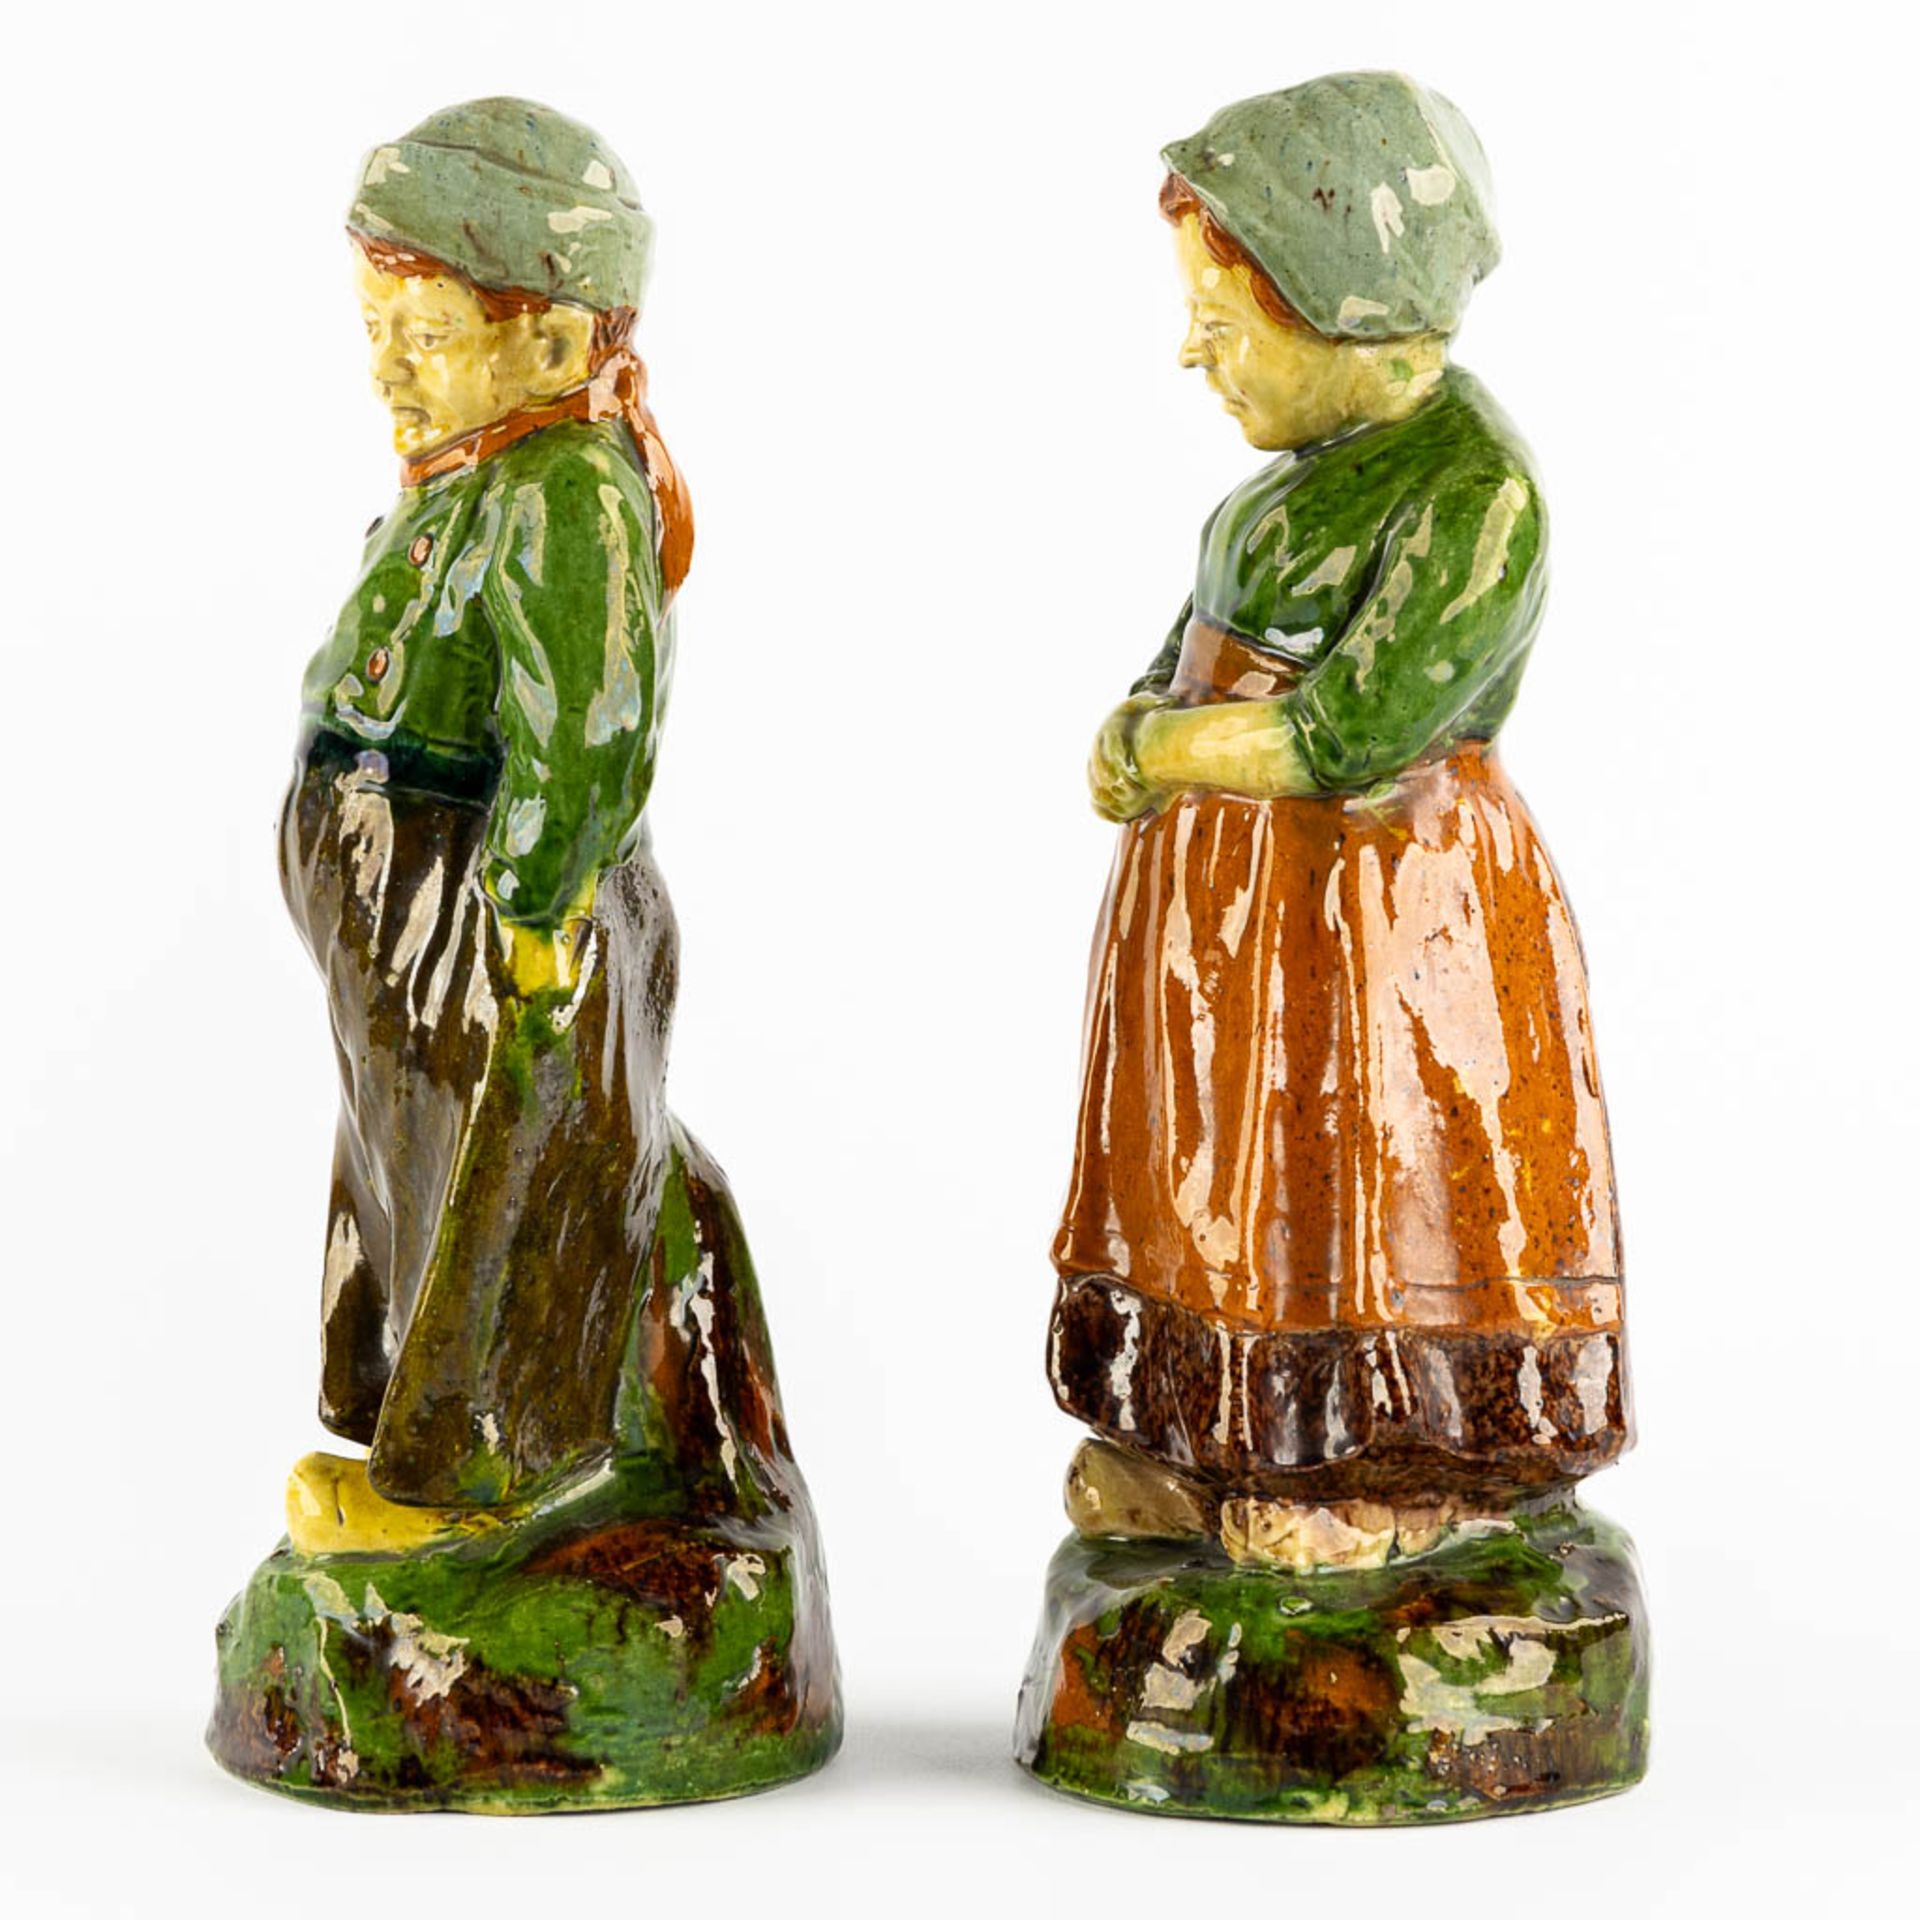 Figurine of a Man and Woman, Flemish Earthenware, possibly Caessens. Circa 1900. (H:32 x D:12 cm) - Bild 6 aus 9